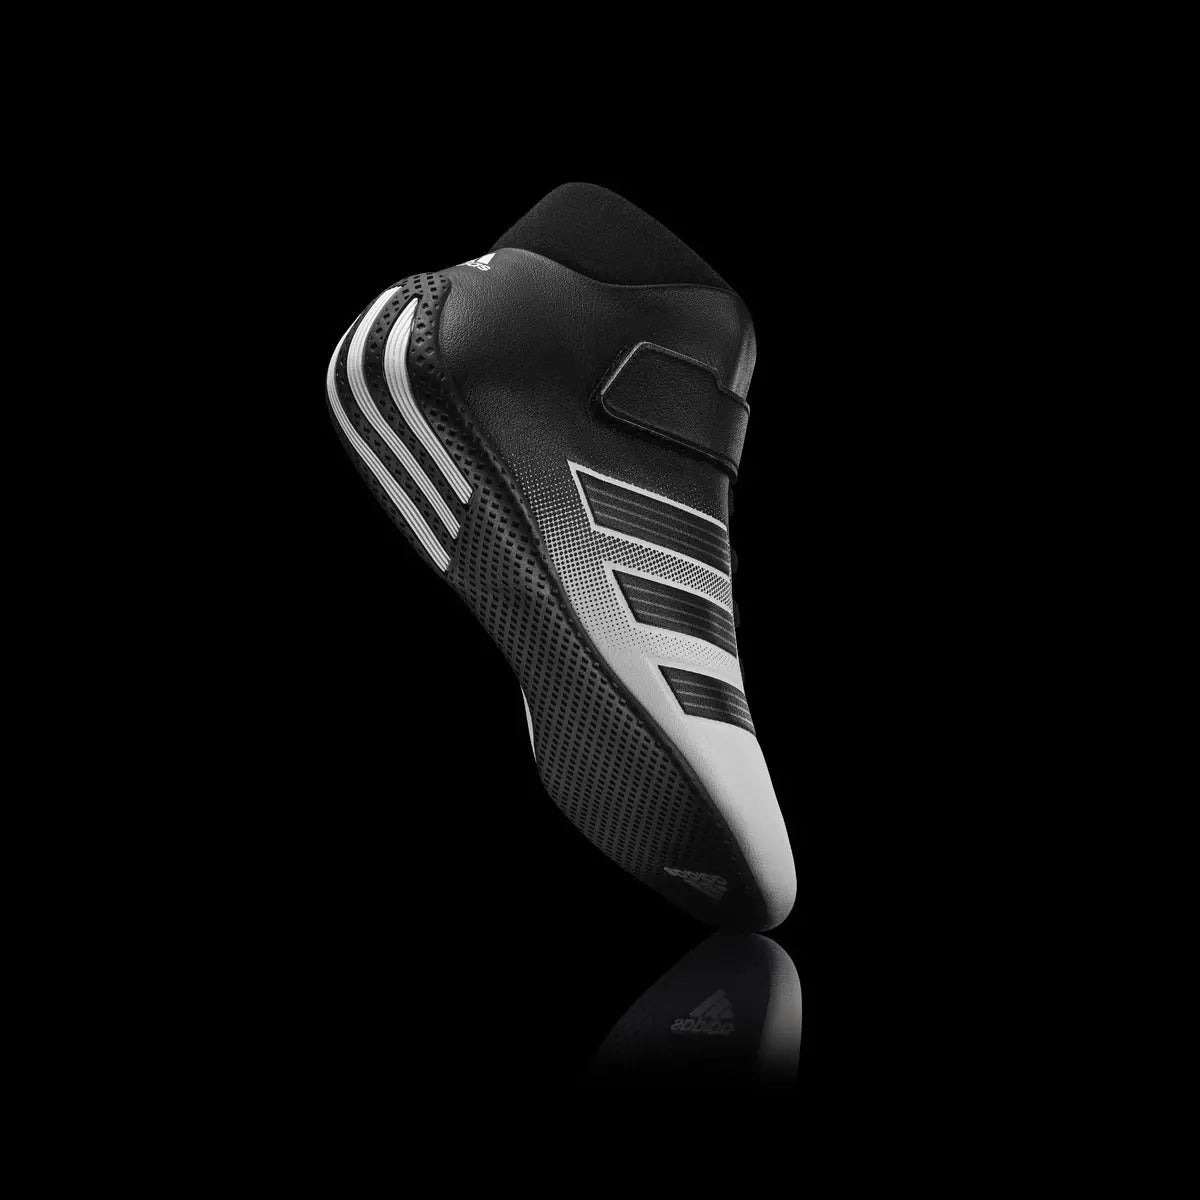 adidas RS Boots White/Black - Fyshe.com